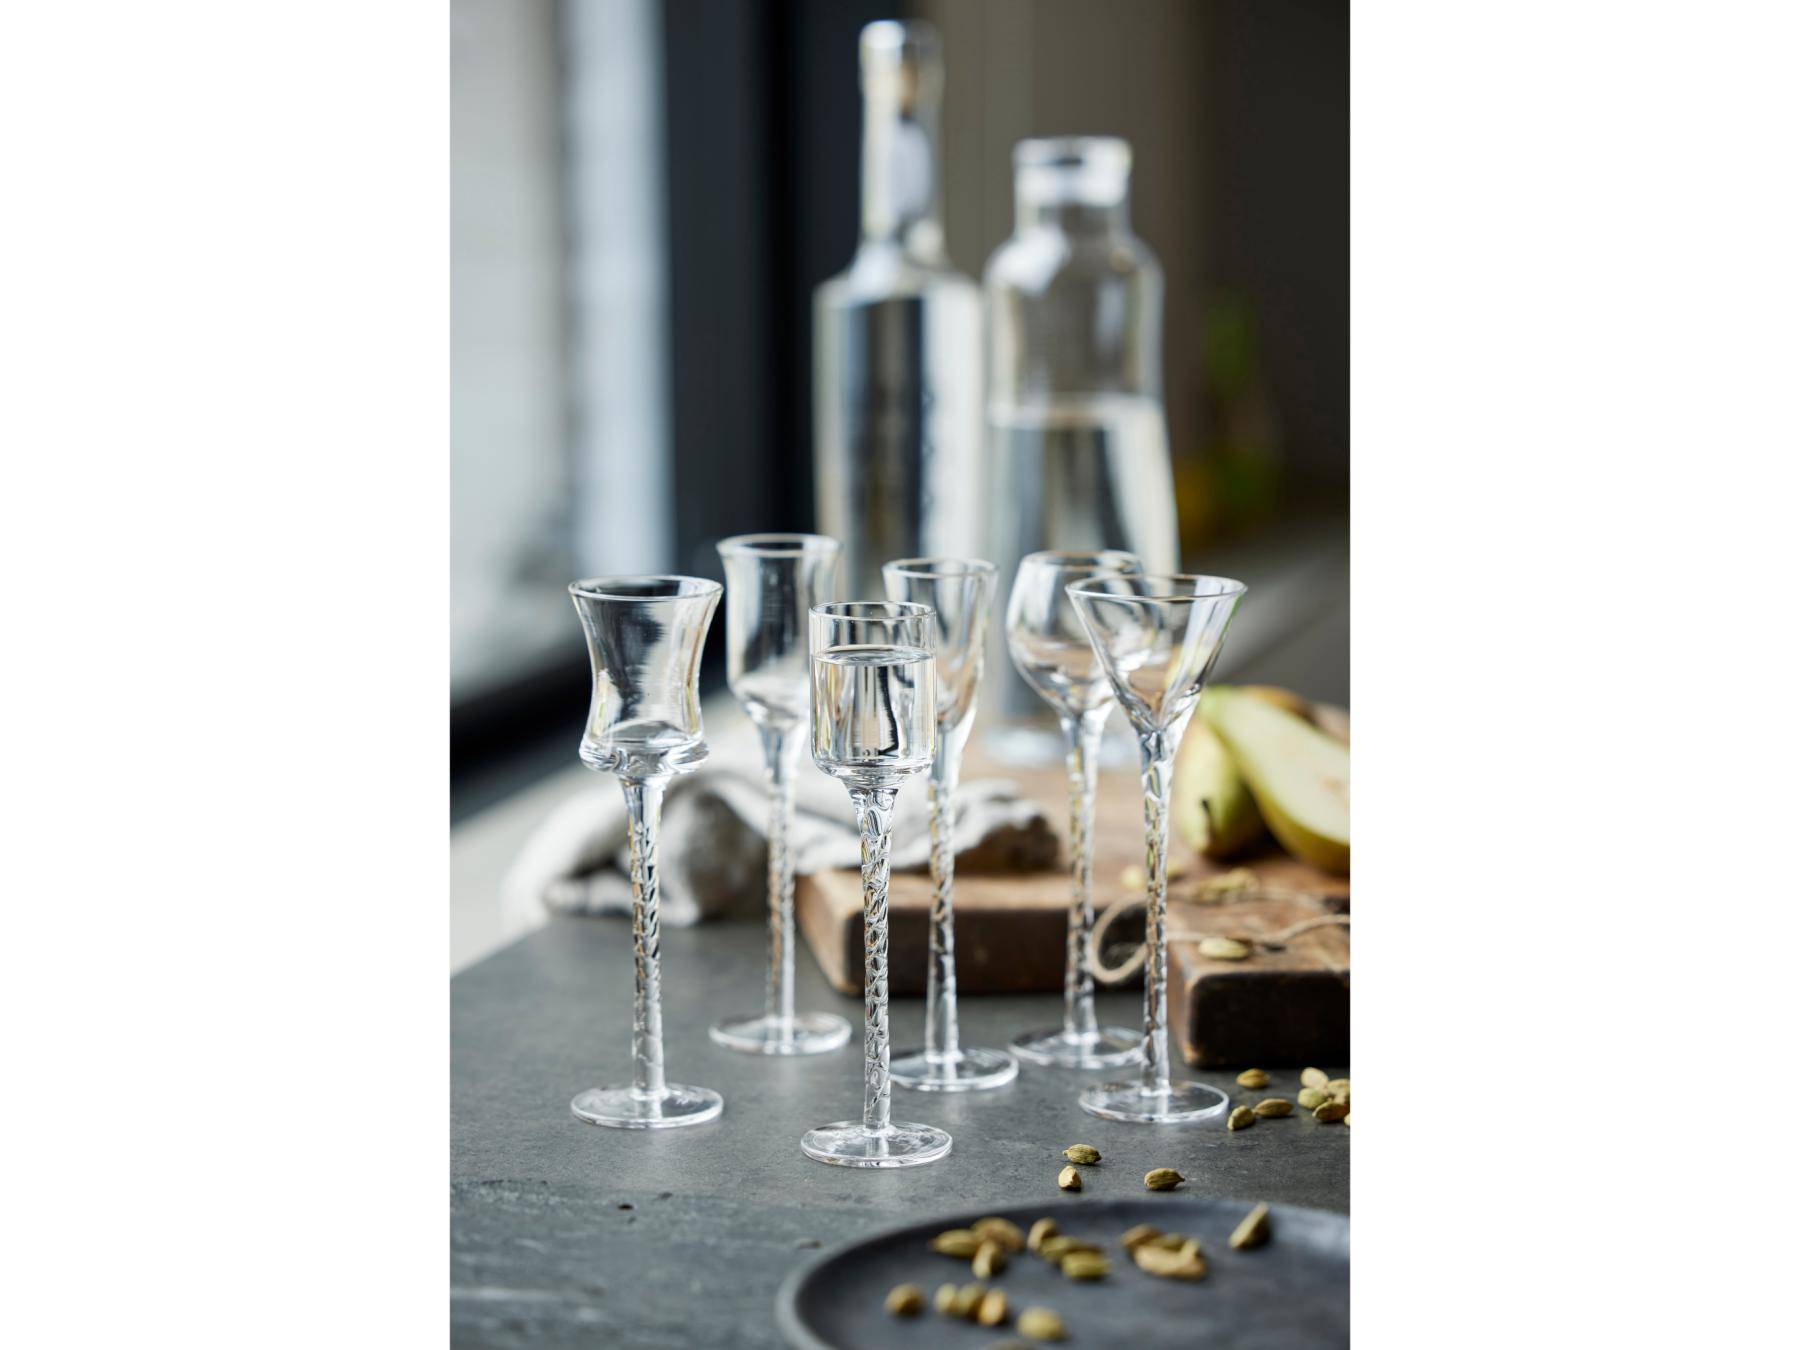 Lyngby Aquavit / borrel / schnaps glaasjes Rome 18 cm hoog - 5 cl - set van 6 stuks - helder glas - Accessoire Loods